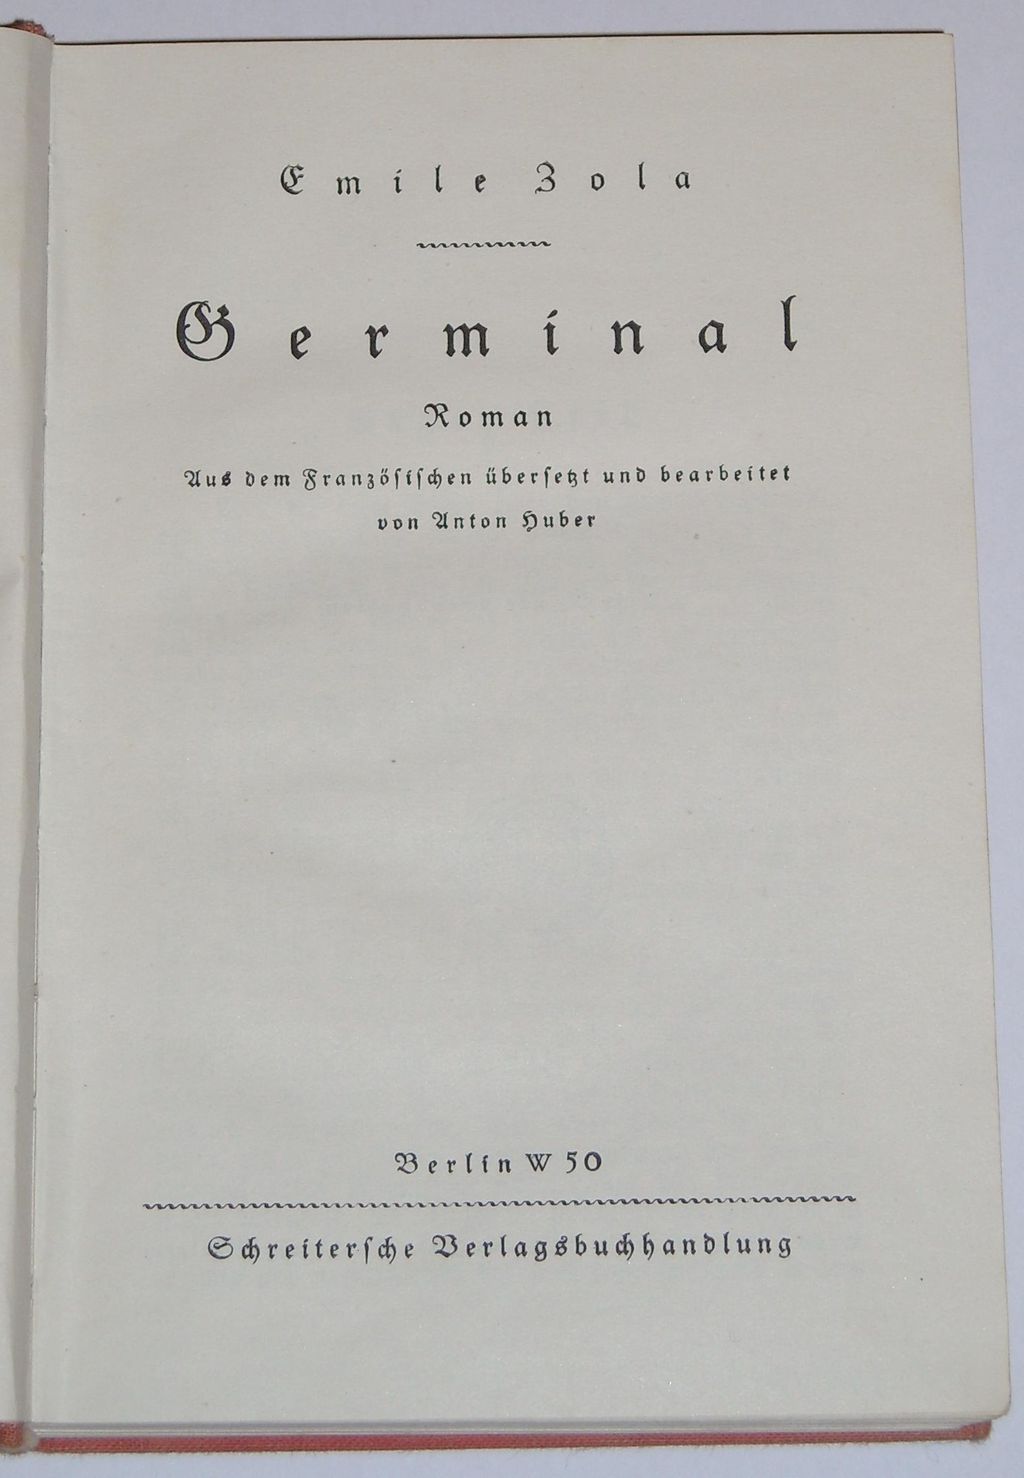 Buch: Zola, Emile, "Germinal", nach 1885